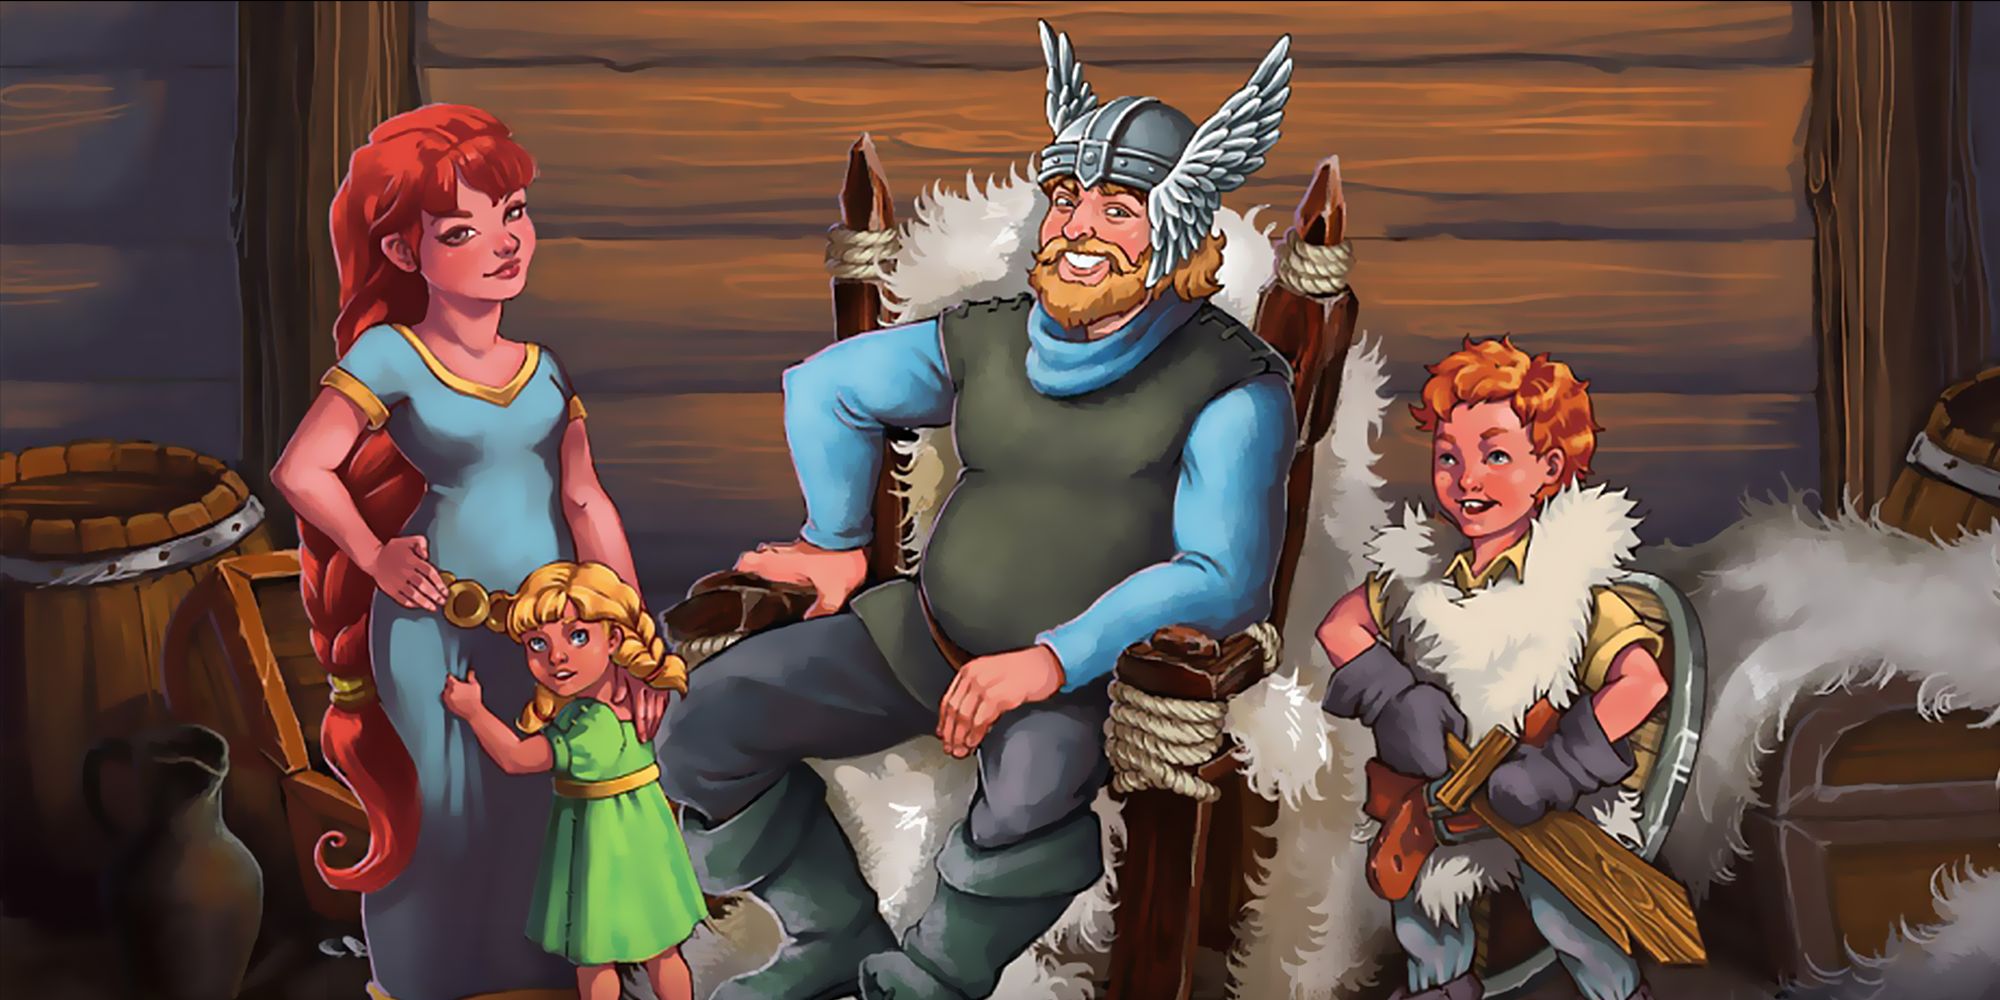 Viking Saga 2: New World